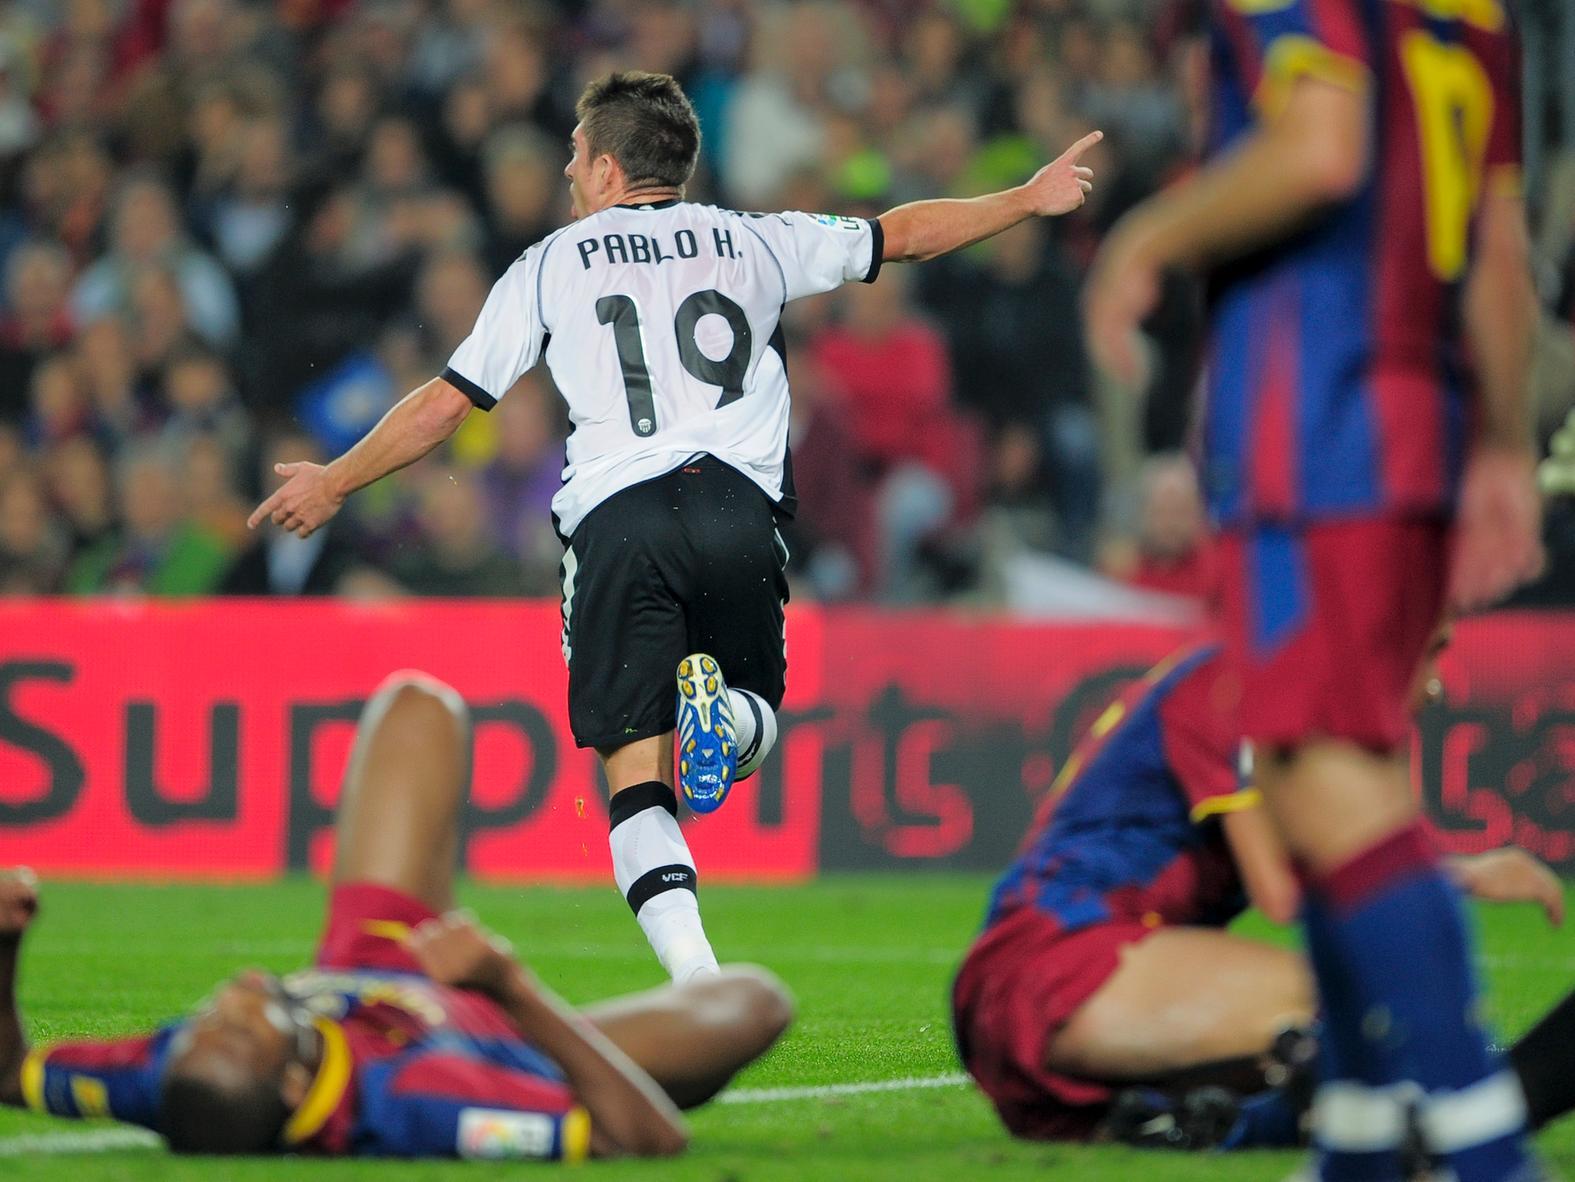 Pablo Hernandez scoring for Valencia against Barcelona